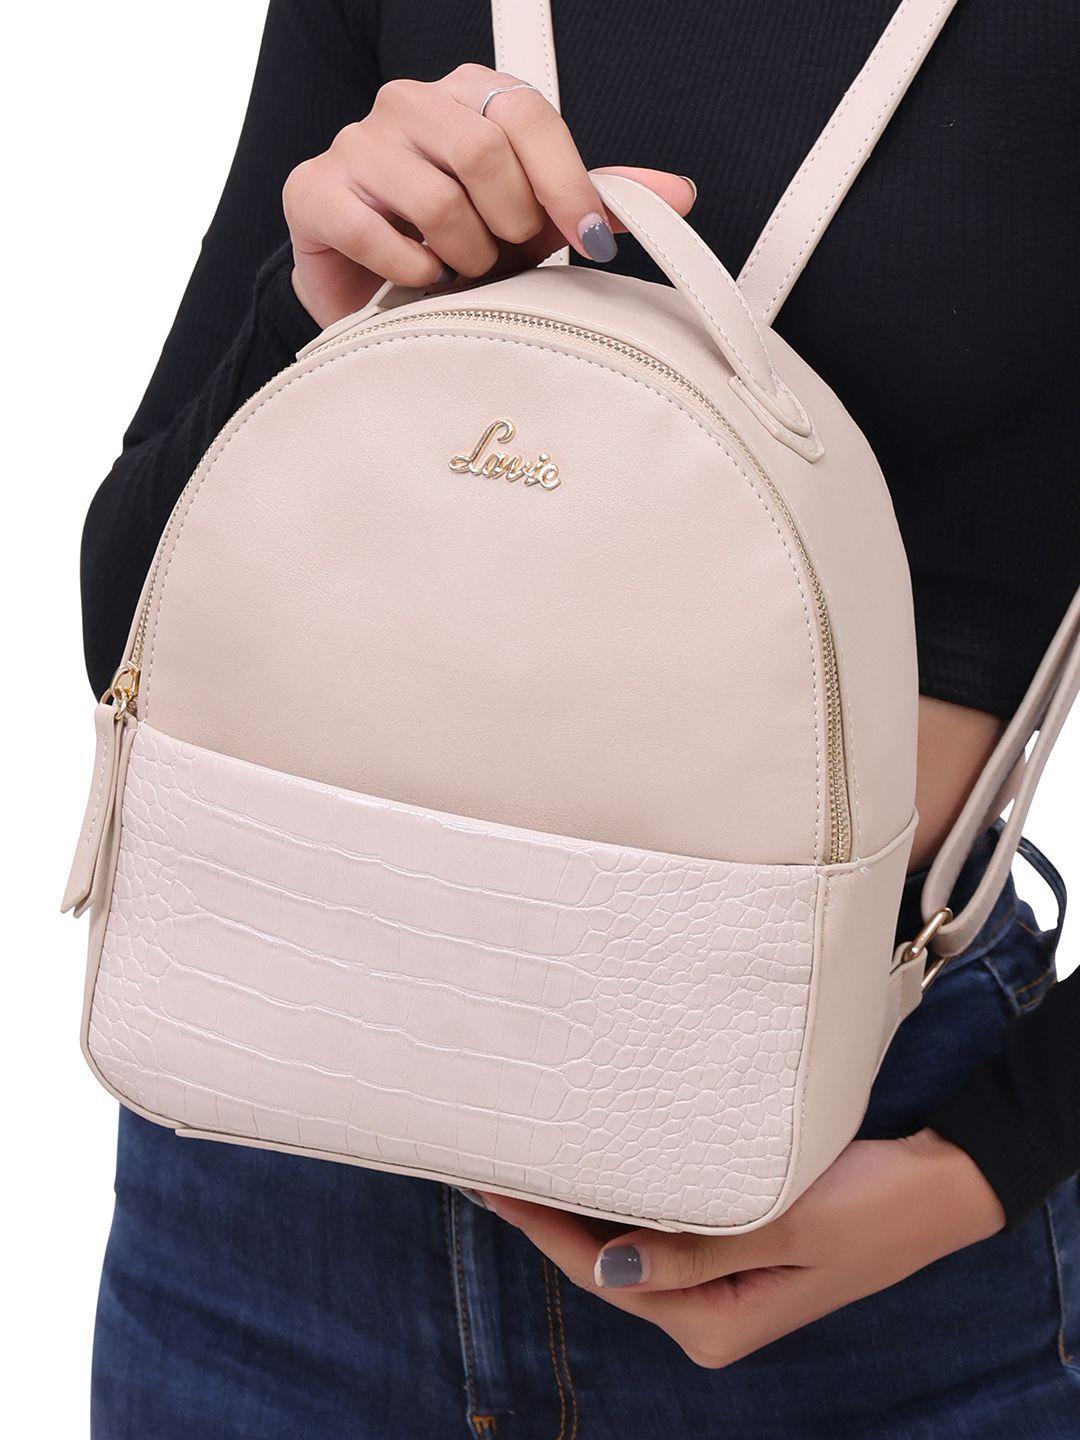 lavie beetle women cream-colored stylish backpack